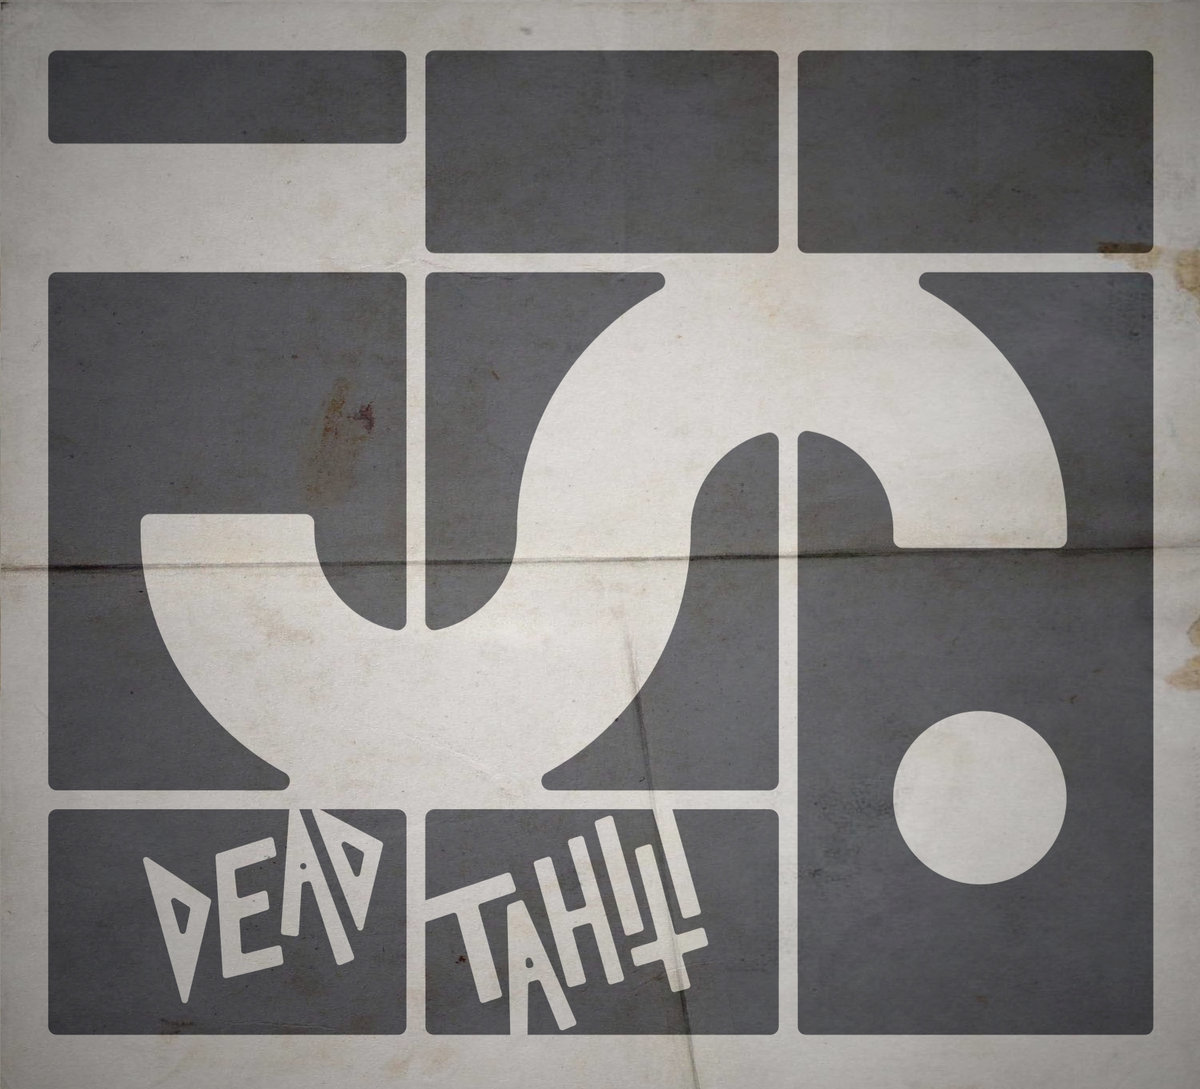 Dead Tahiti cover